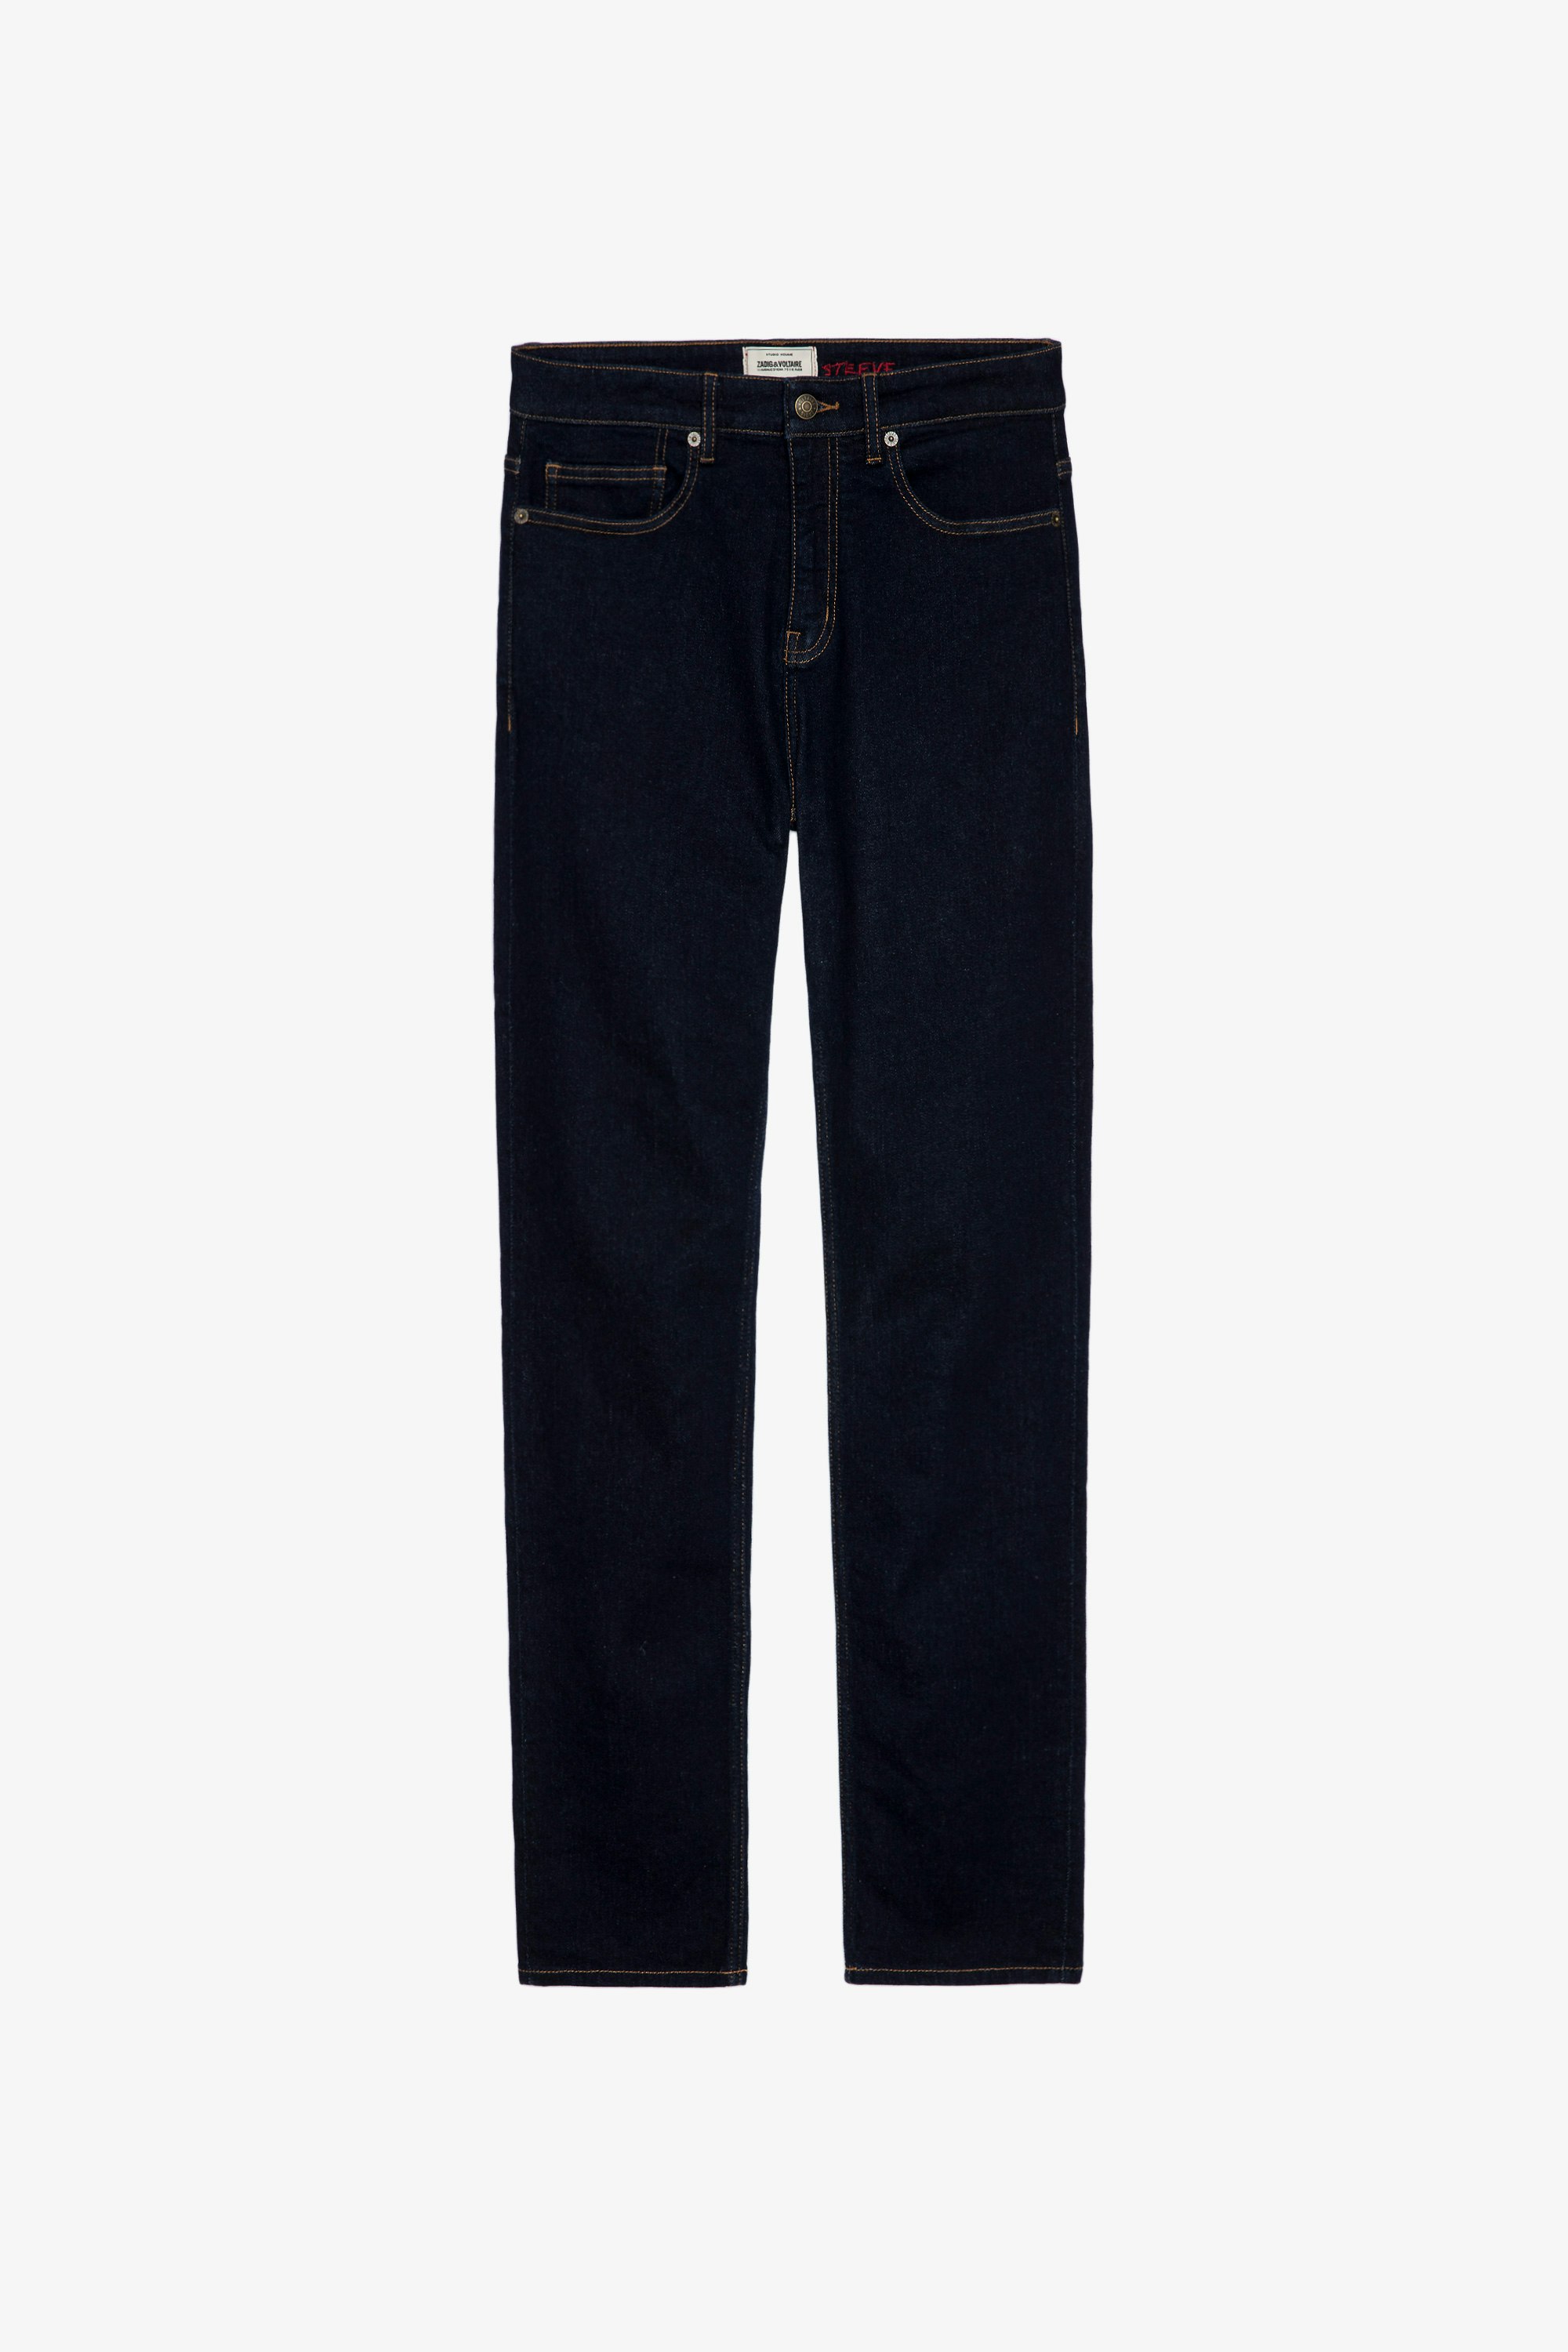 Steeve Jeans Men’s regular-fit raw denim jeans